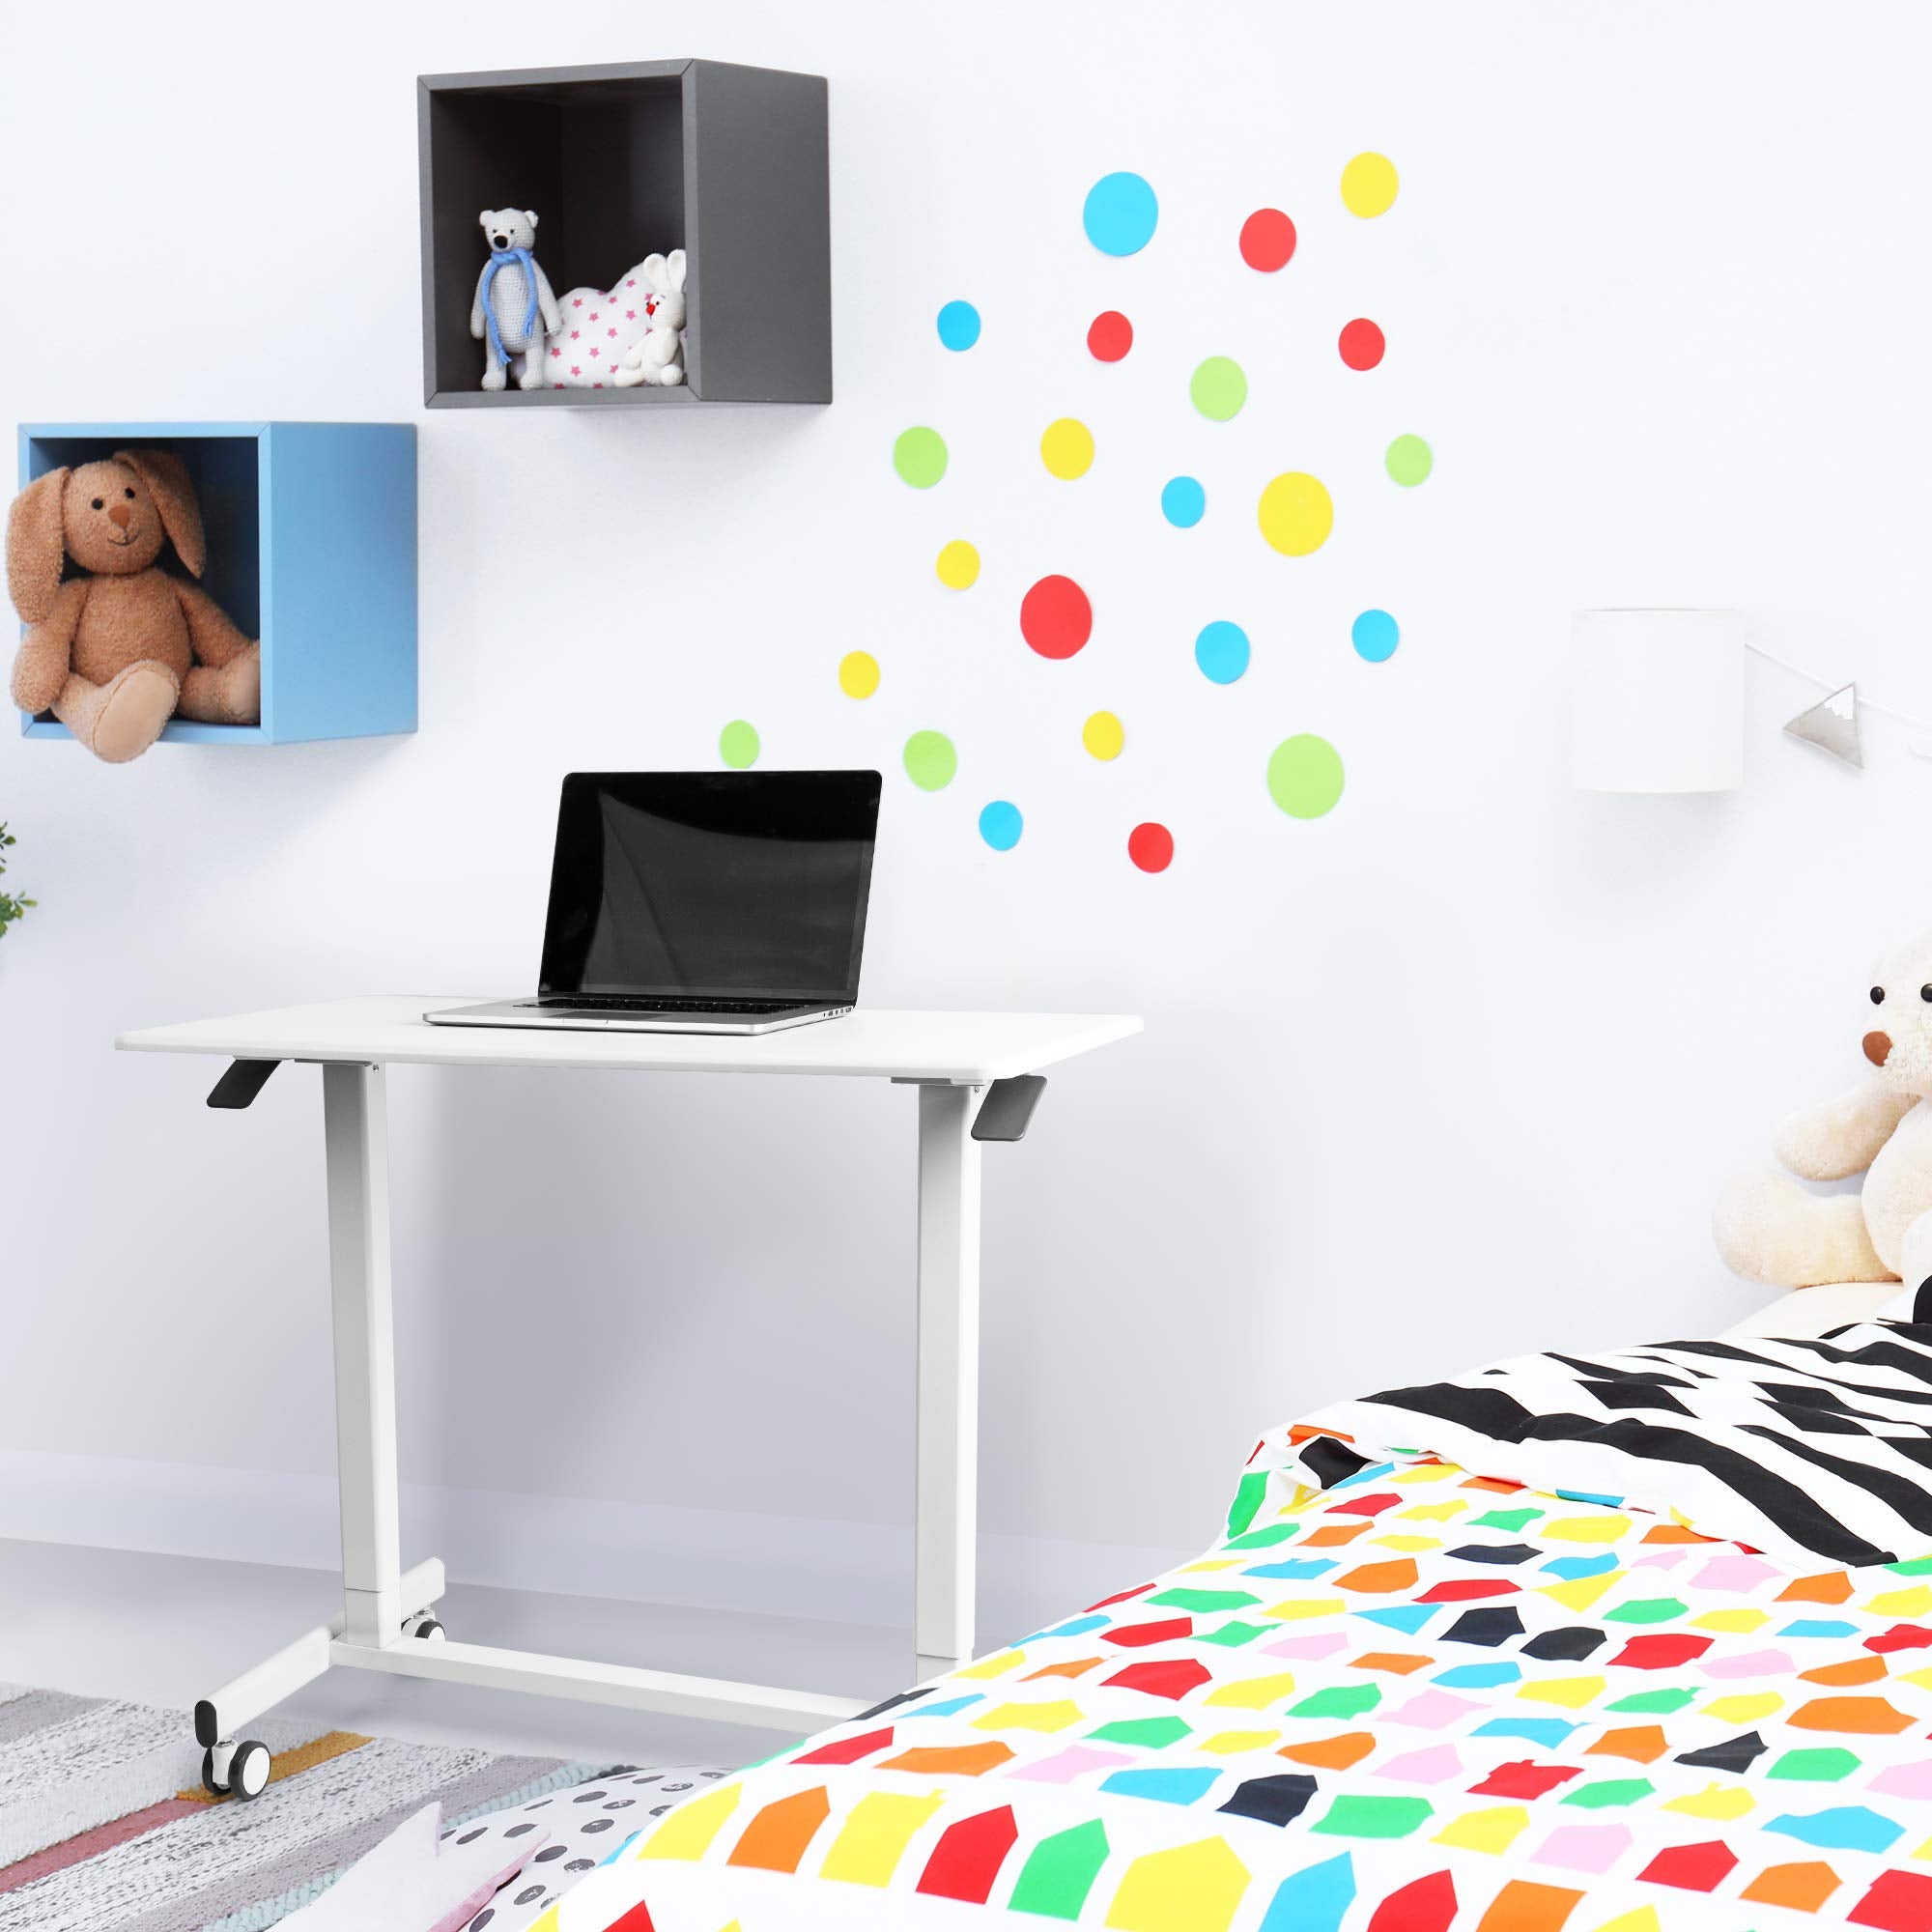 Duronic Sit-Stand Desk TM03T | White Ergonomic Desk | Multi-Use Home Office Table on Wheels | For both Adults & Children | 88x50cm Platform | Portable | Adjustable Height 73-107cm | 15kg Capacity…